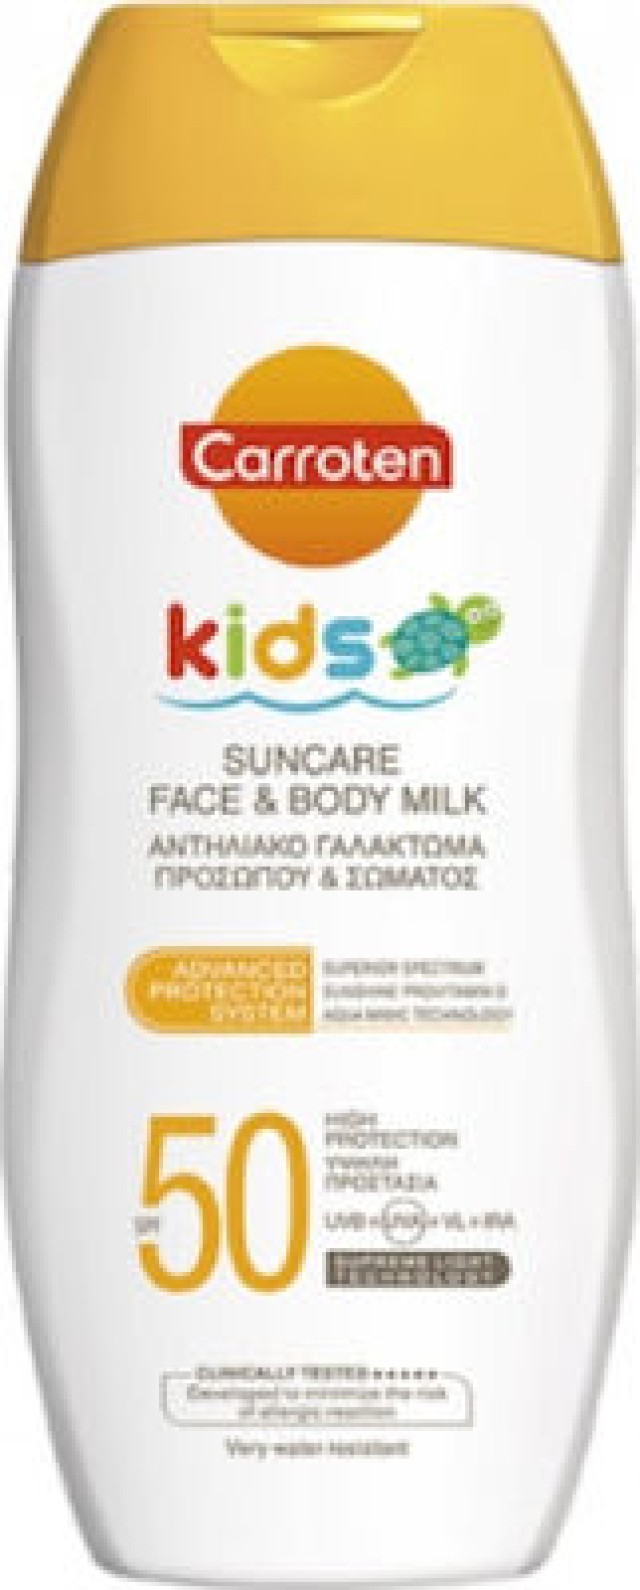 Carroten Kids Suncare Face & Body Milk Παιδικό Αντηλιακό για Ευαίσθητη Επιδερμίδα SPF50, 200ml